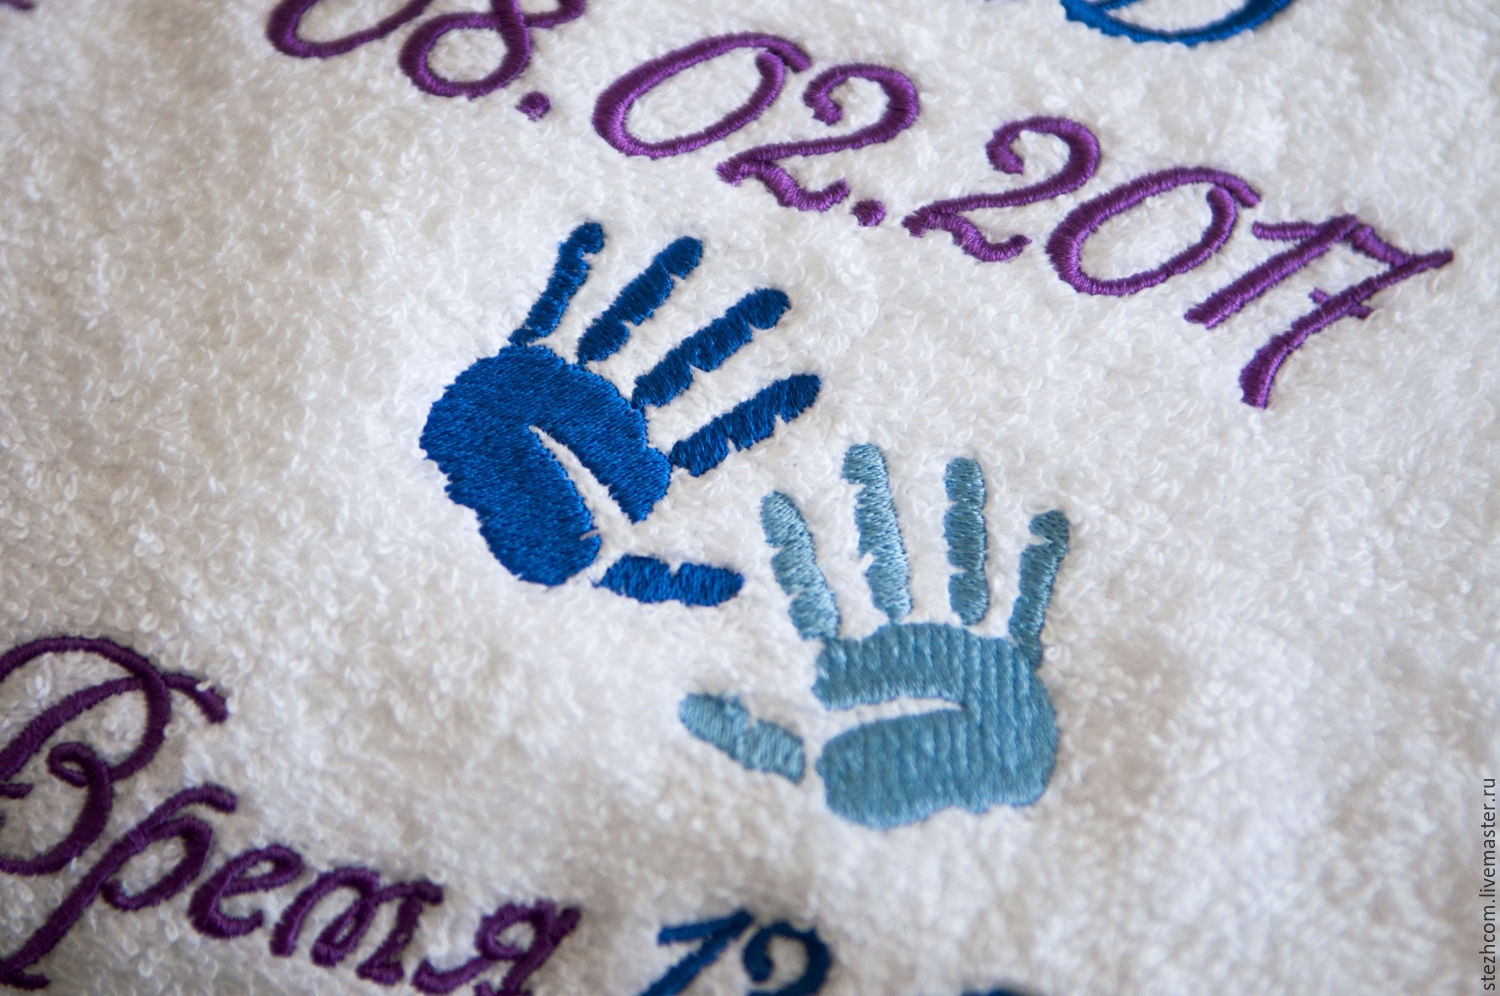 Вышивка на полотенце для ребенка